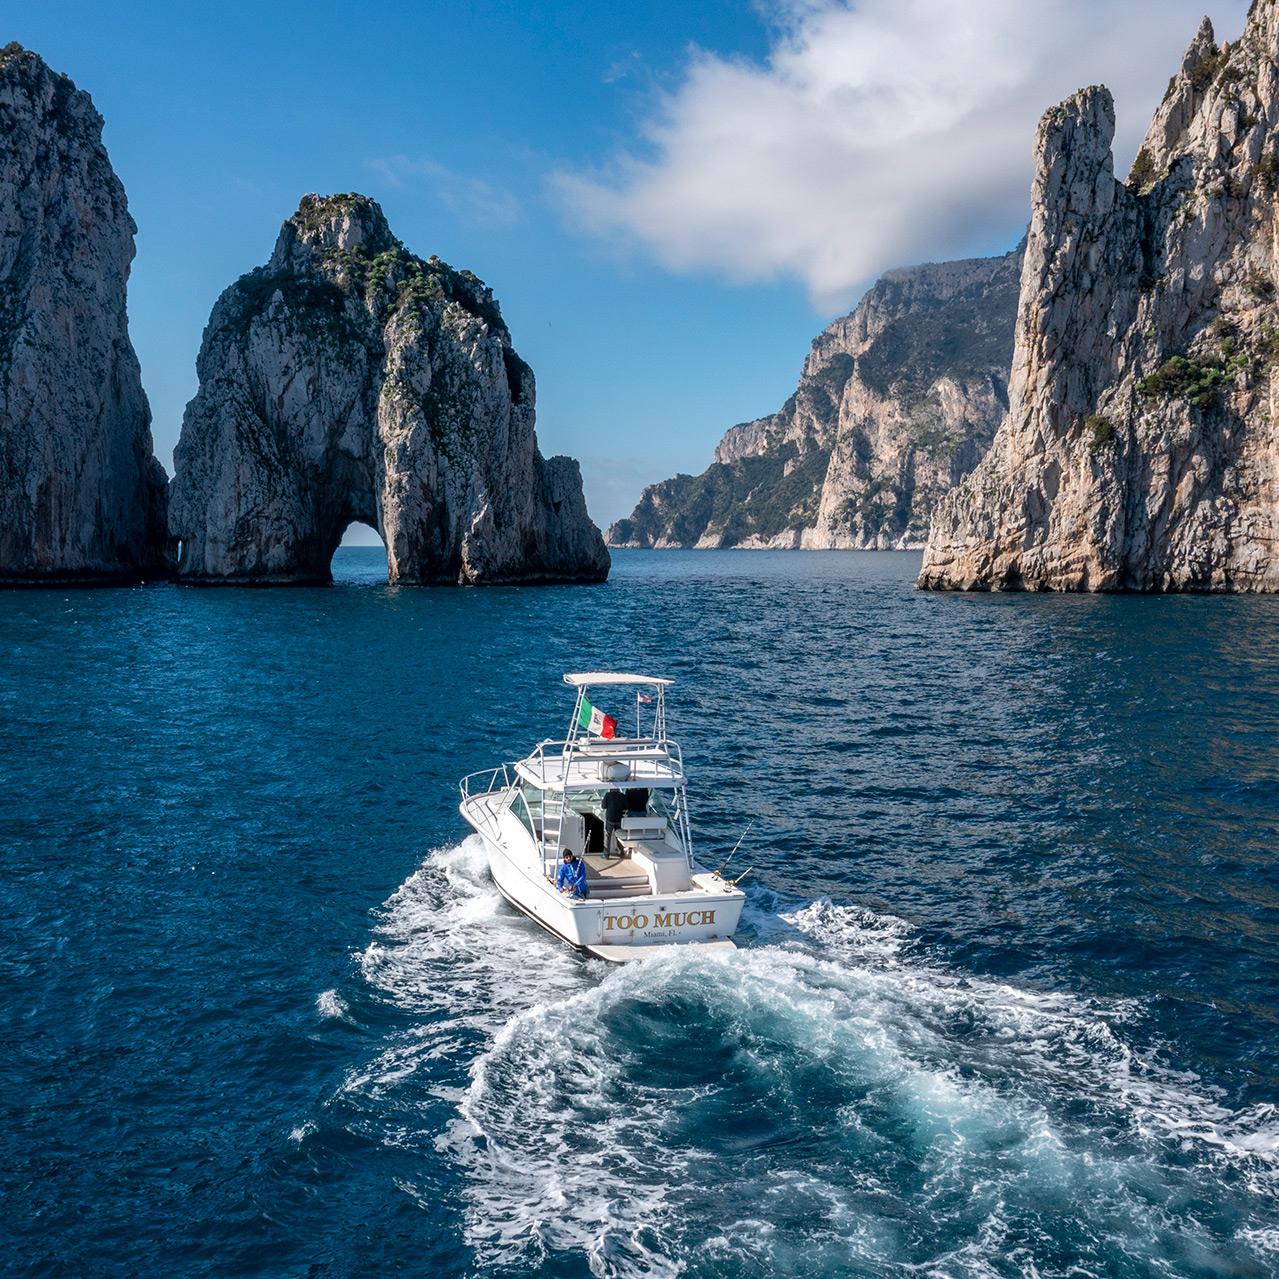 Boat Day in Capri and Blue Grotto